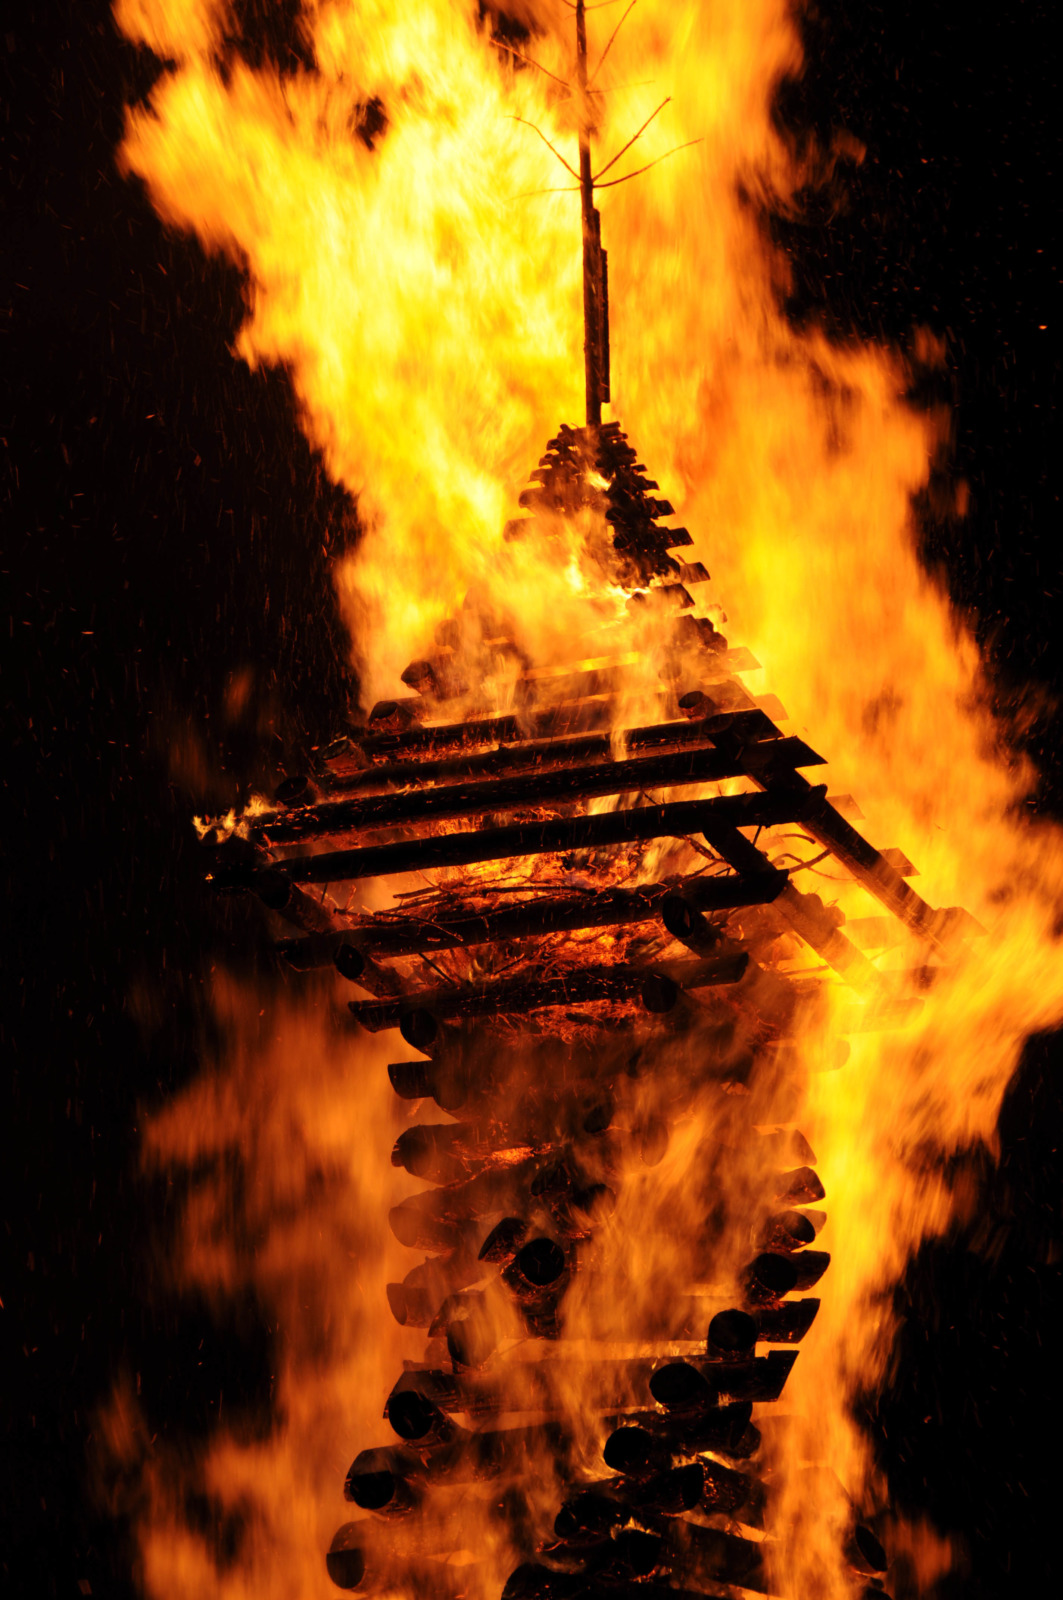 Feast of Saint John in France - Midsummer fire in the Saint-Amarin valley © Daniel Nussbaum